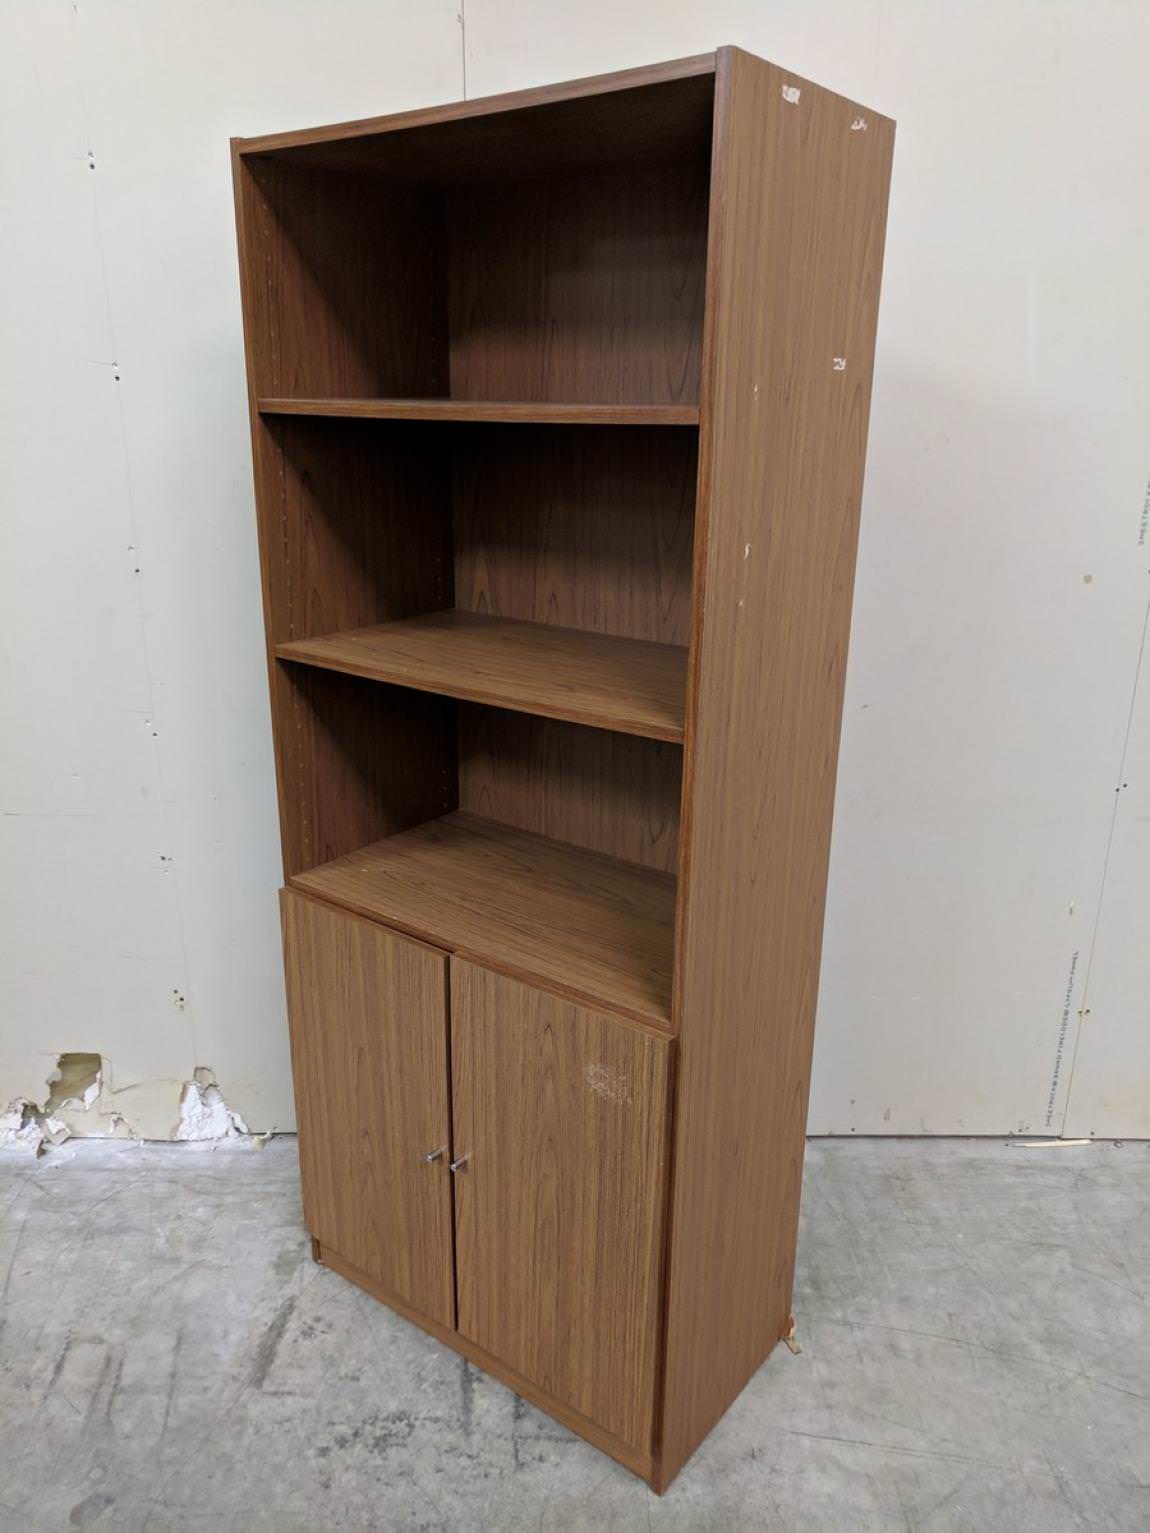 Walnut Laminate Bookshelf with Hinged Door Storage – 30 Inch Wide